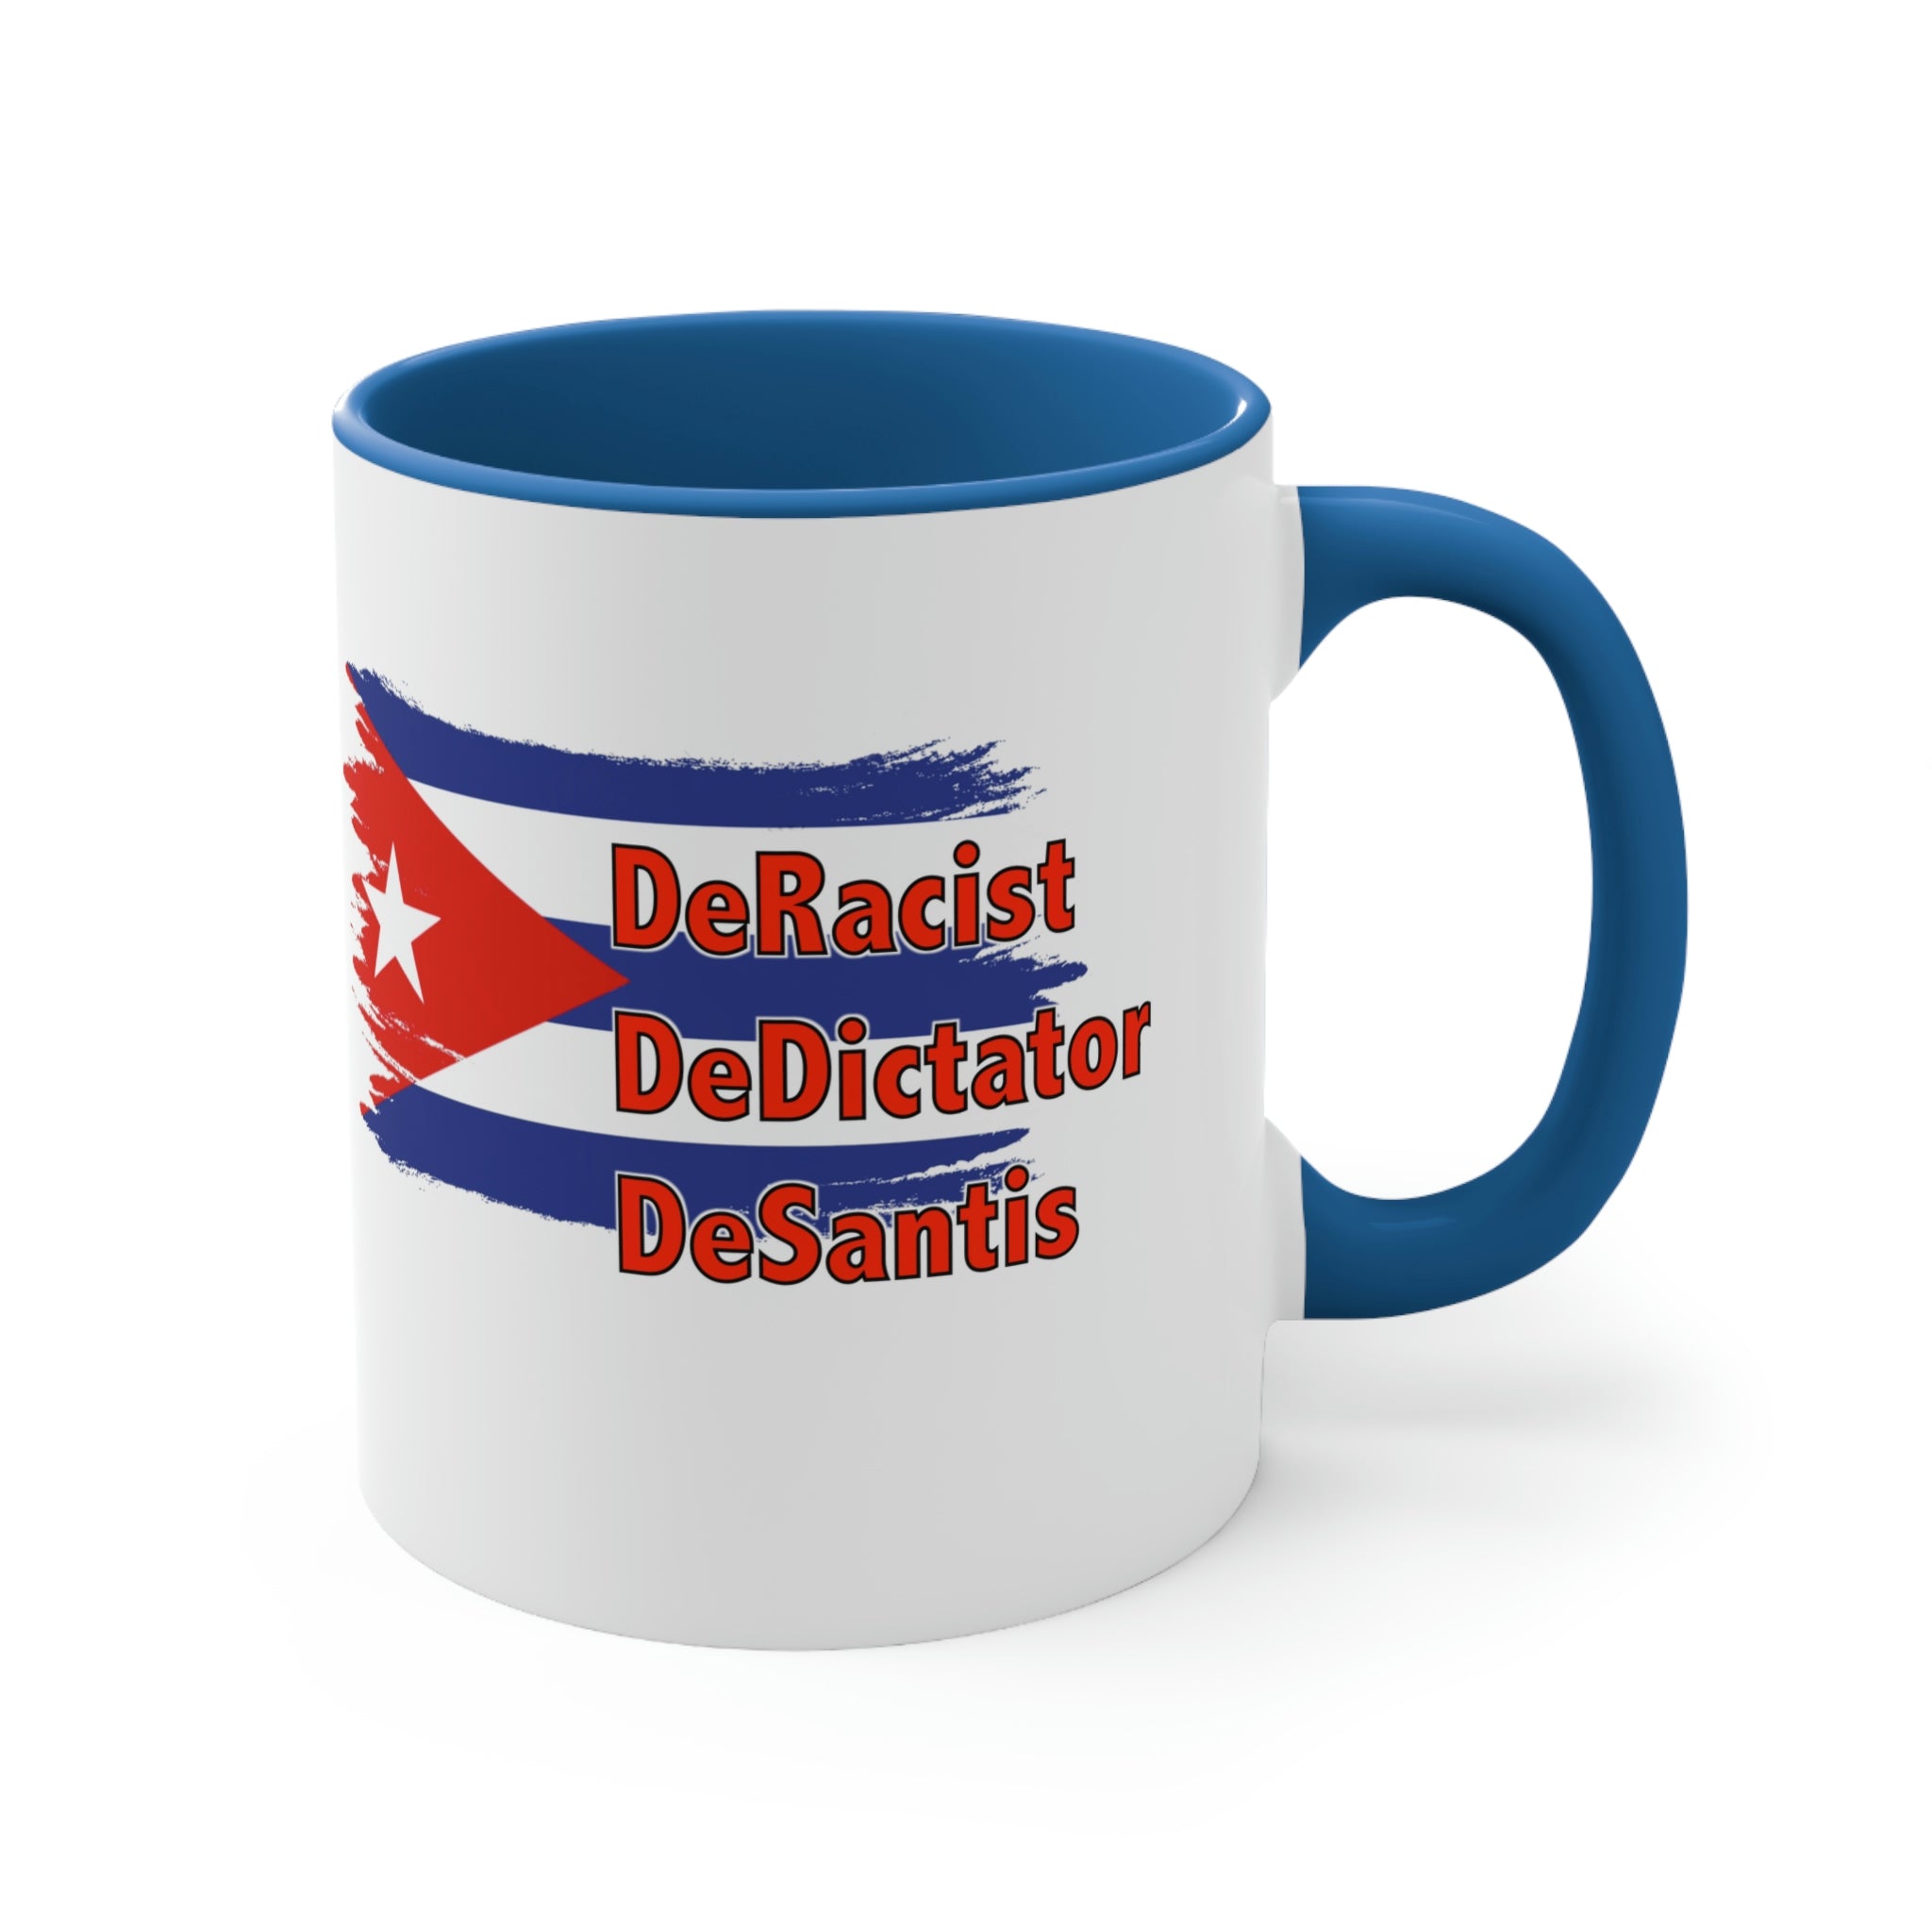 DeRacisist DeDictator DeSantis Coffee Mug, 11oz